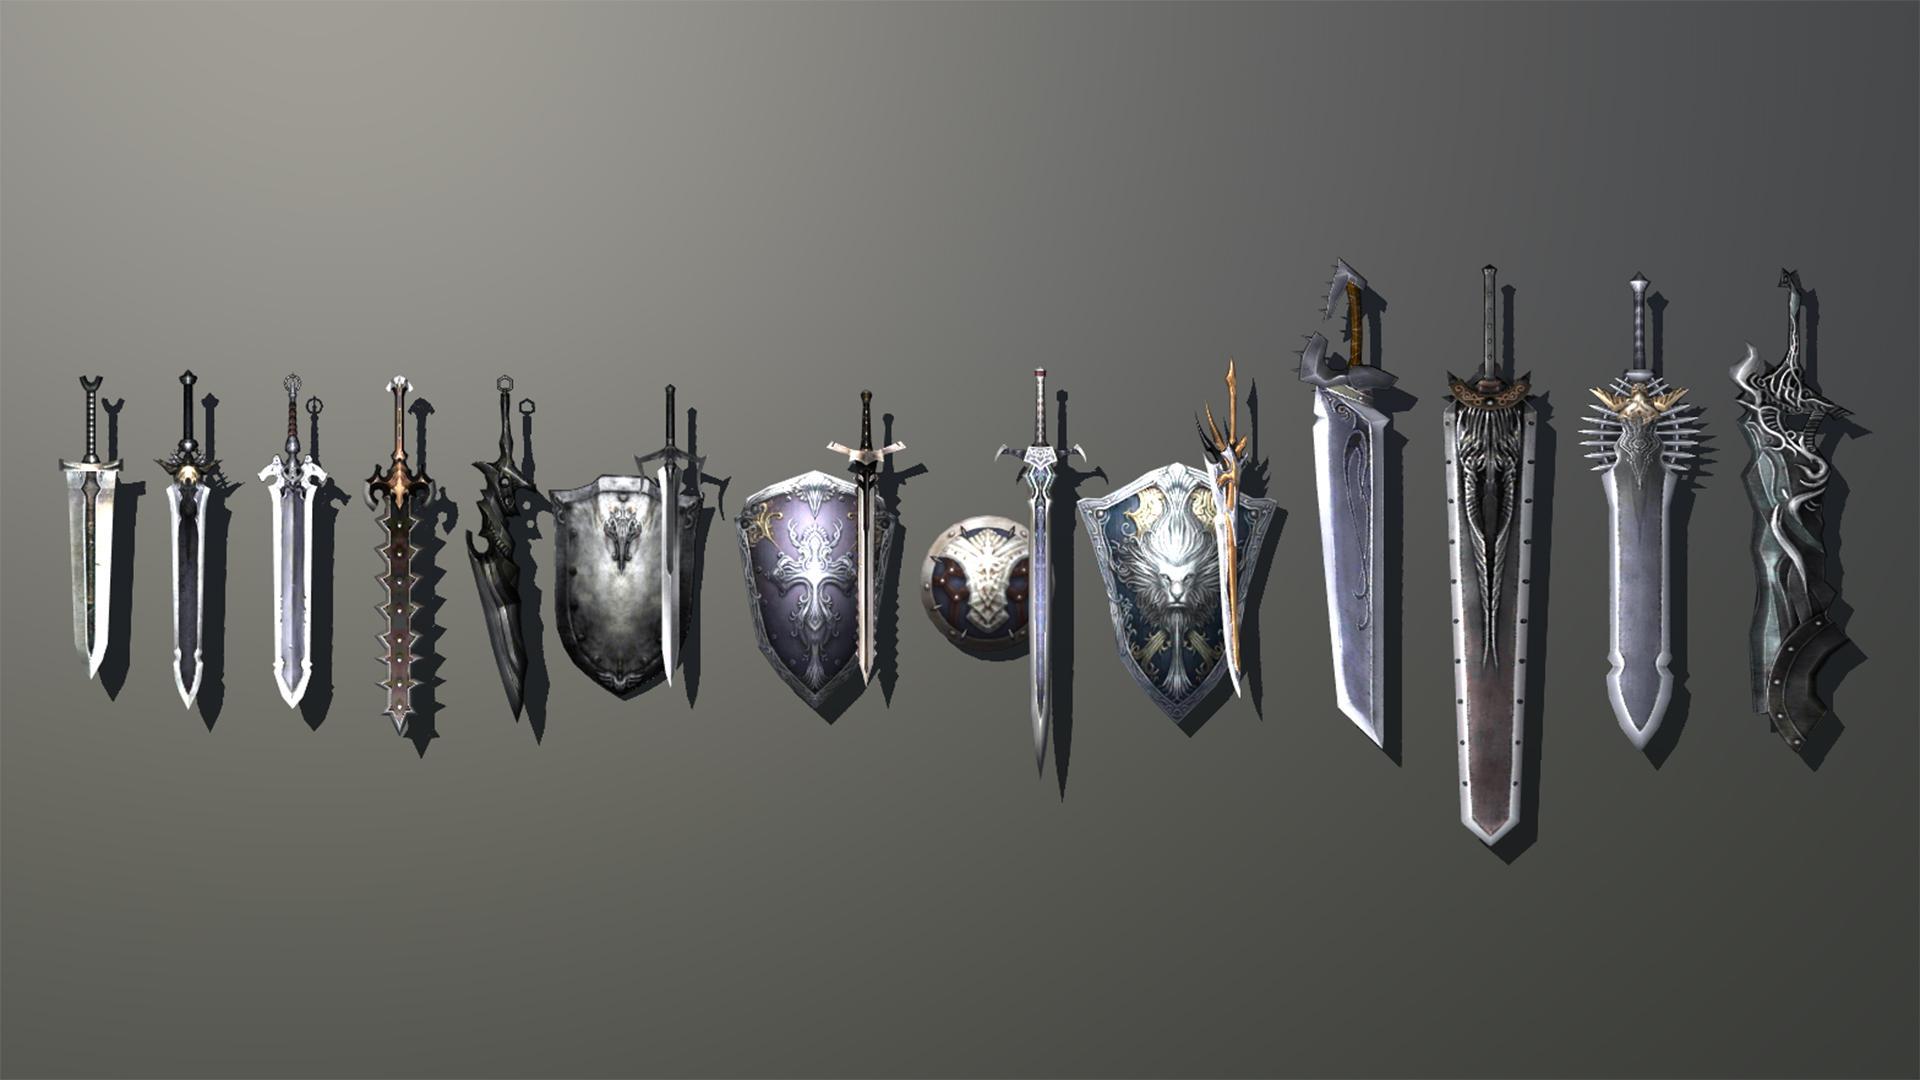 Revenant Knight screenshot game